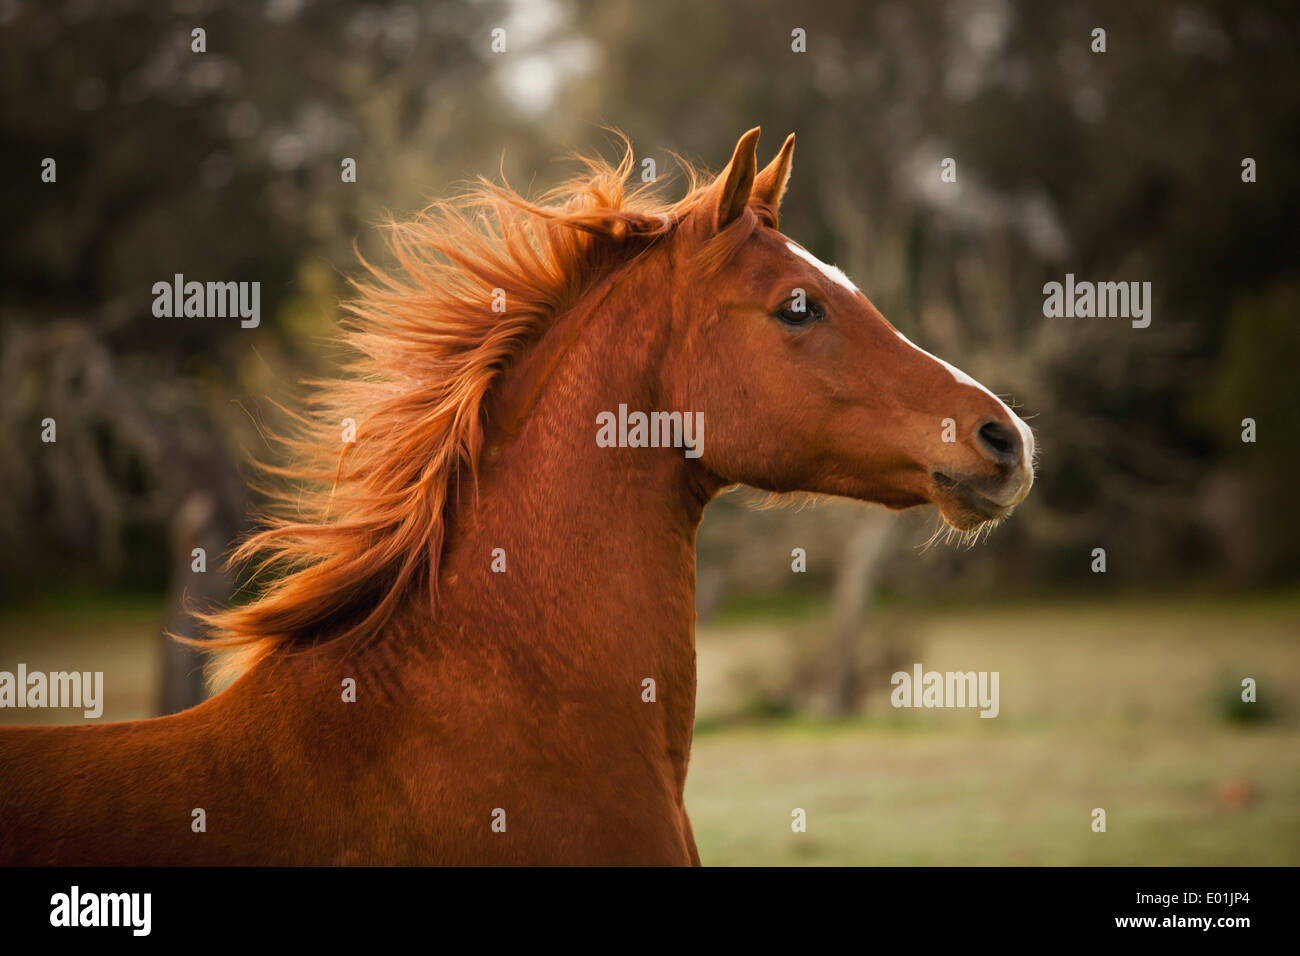 Pura Raza Arabe, Arabian horse, chestnut with blaze, portrait, Majorca, Balearic Islands, Spain Stock Photo